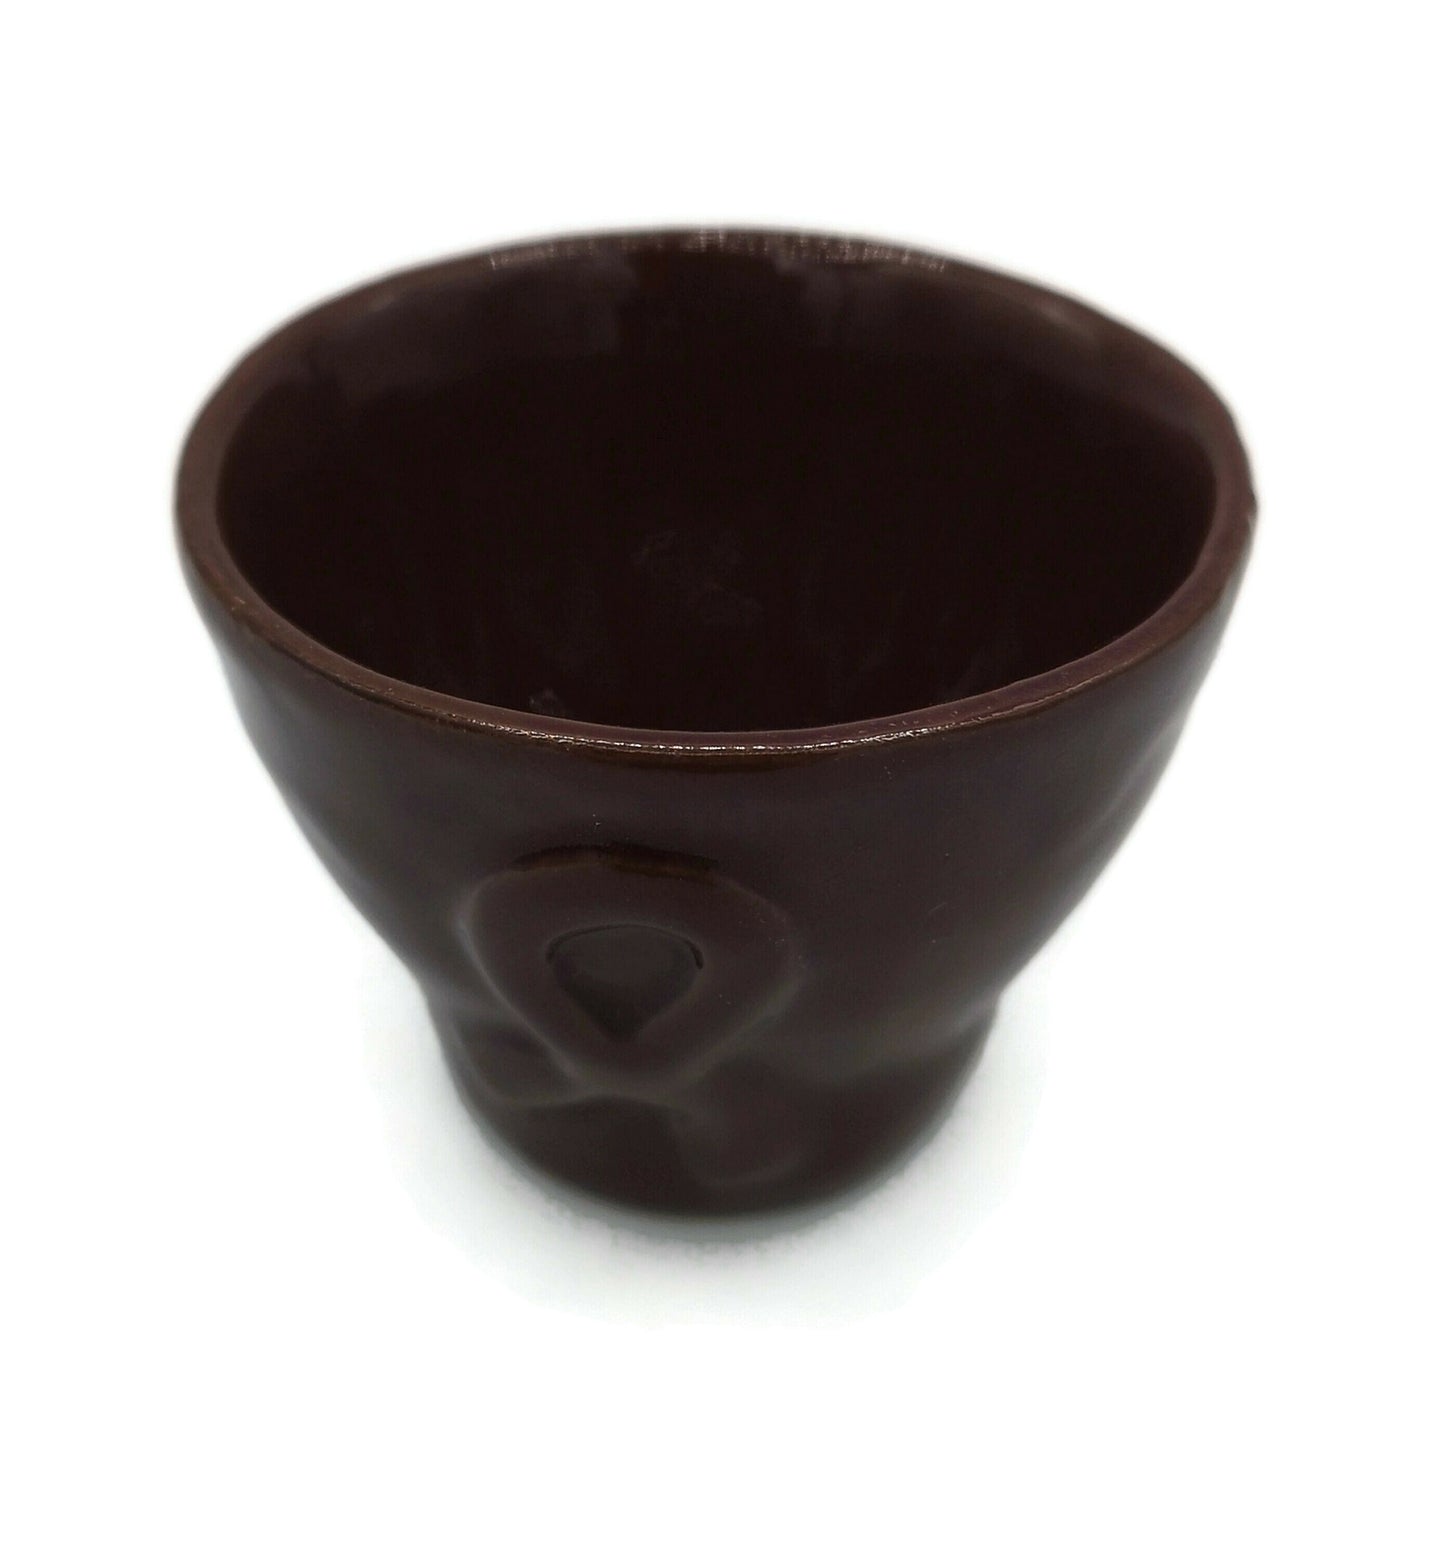 Handmade Ceramic Espresso Cup, Coffee Lovers Gift For Women, Shot Glass Mom Birthday Gift From Daughter Trending Now, Stocking Stuffers - Ceramica Ana Rafael